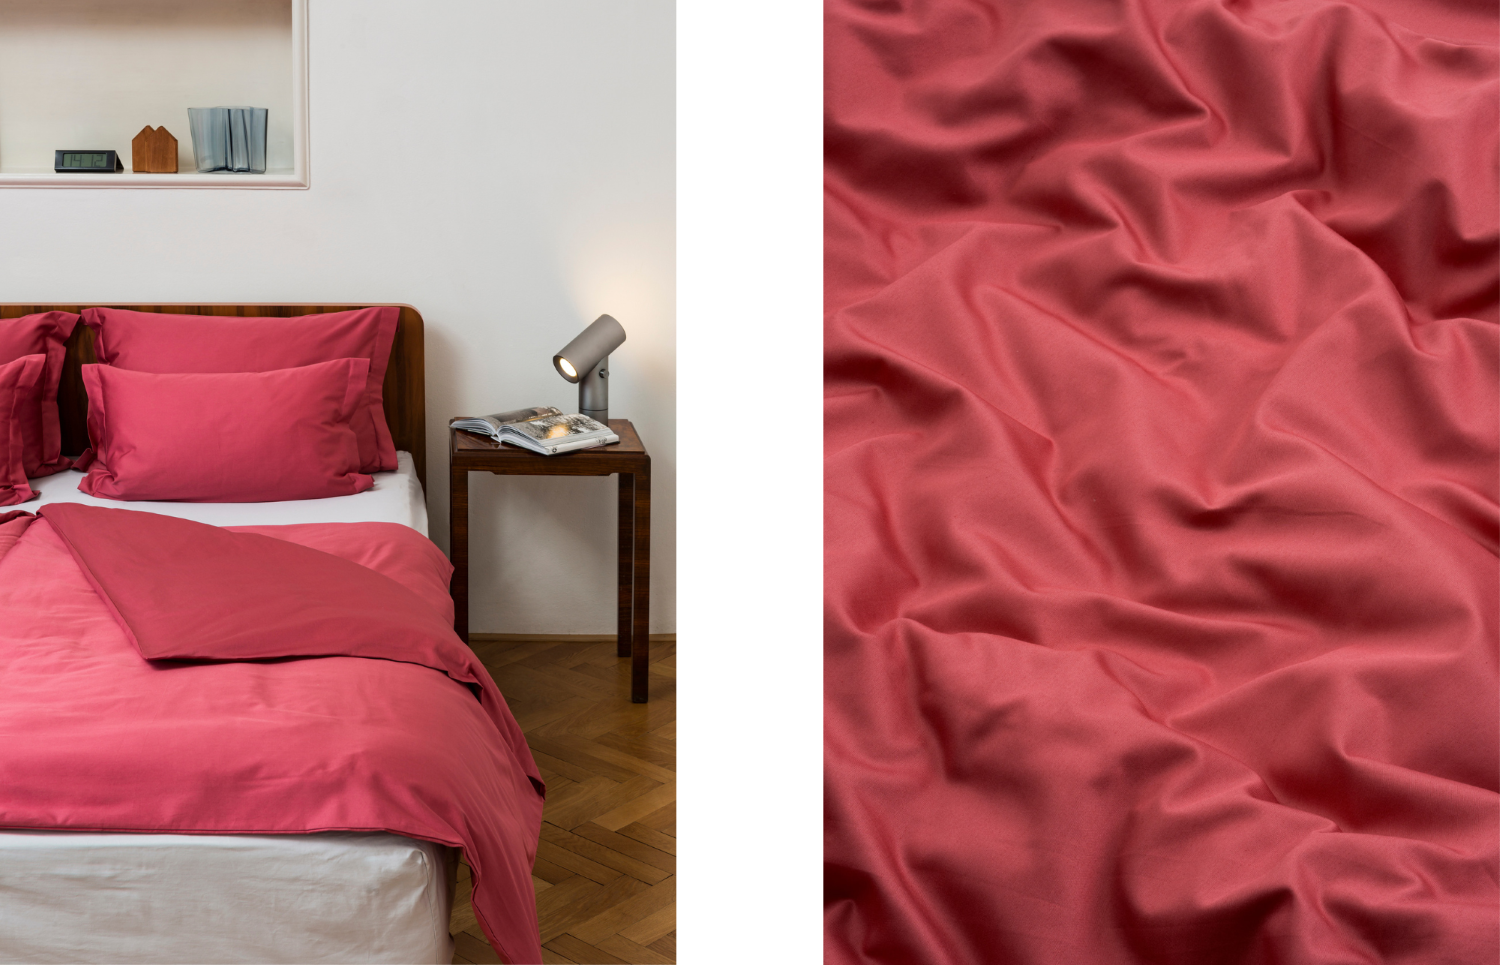 Reddish-pink Japanese Spirit bed linen.